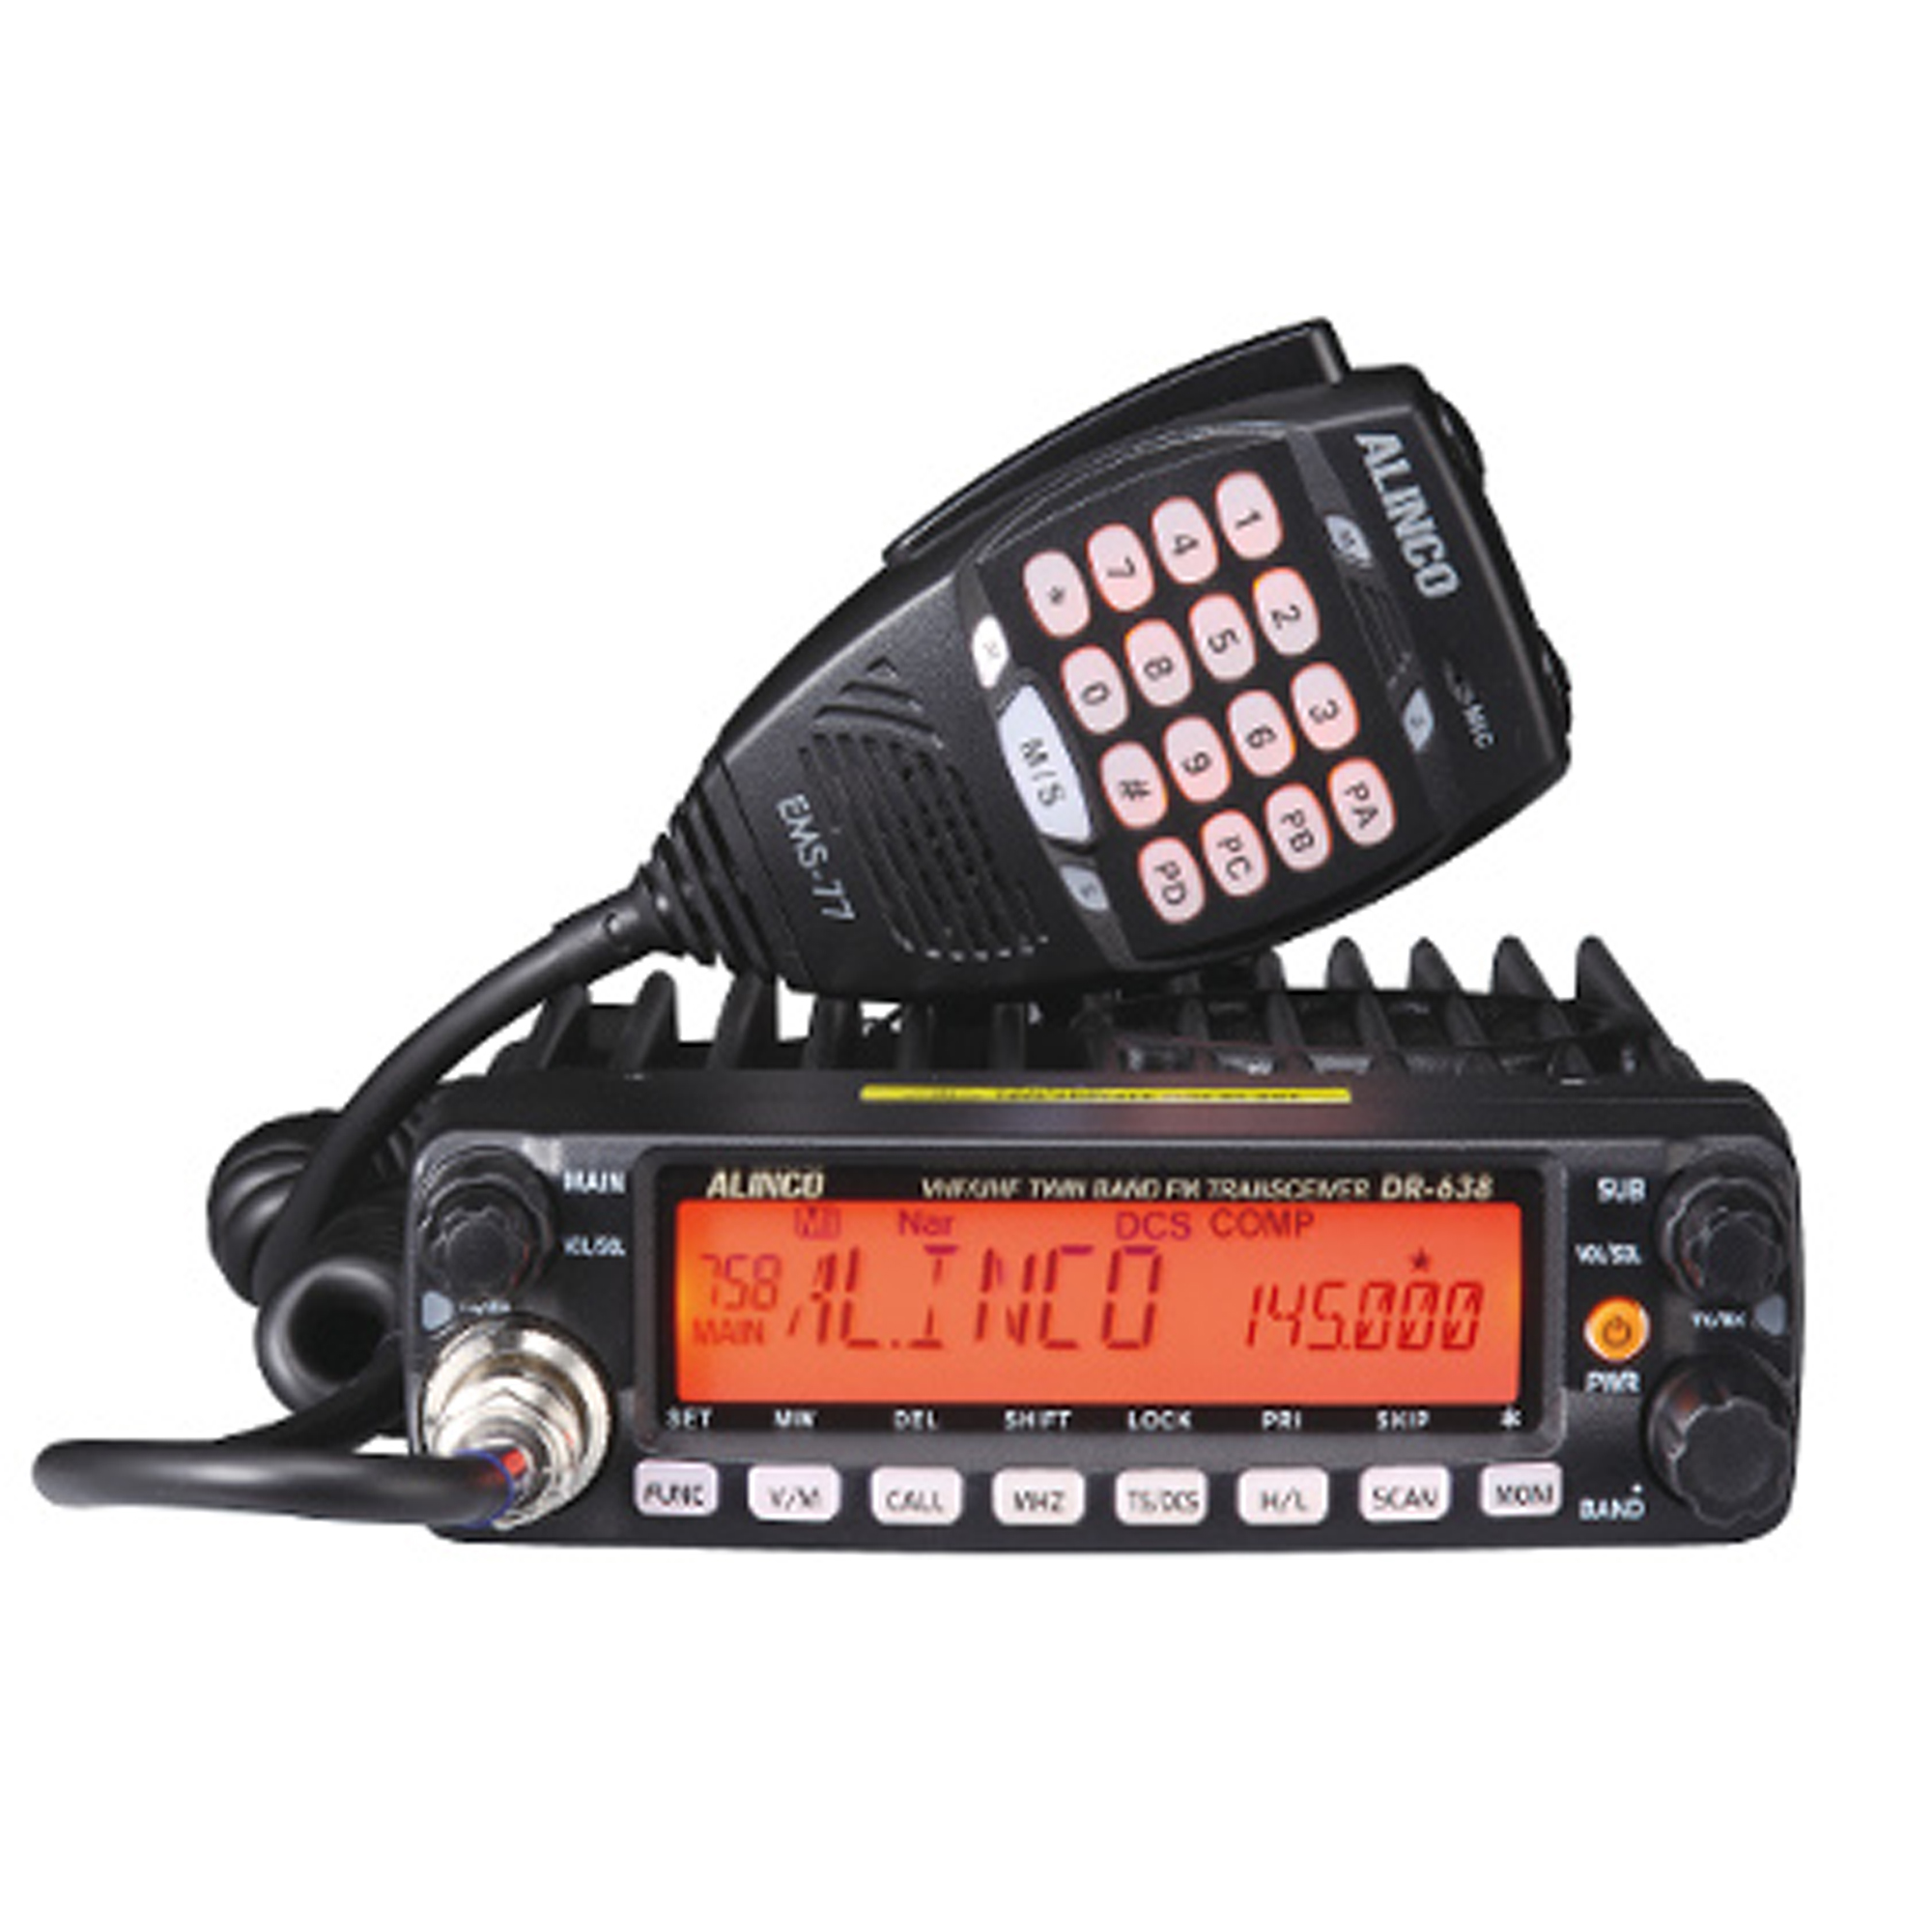 Statie radio VHF/UHF PNI Alinco DR-638HE dual band 144-146MHz/430-440Mhz pentru radioamatori